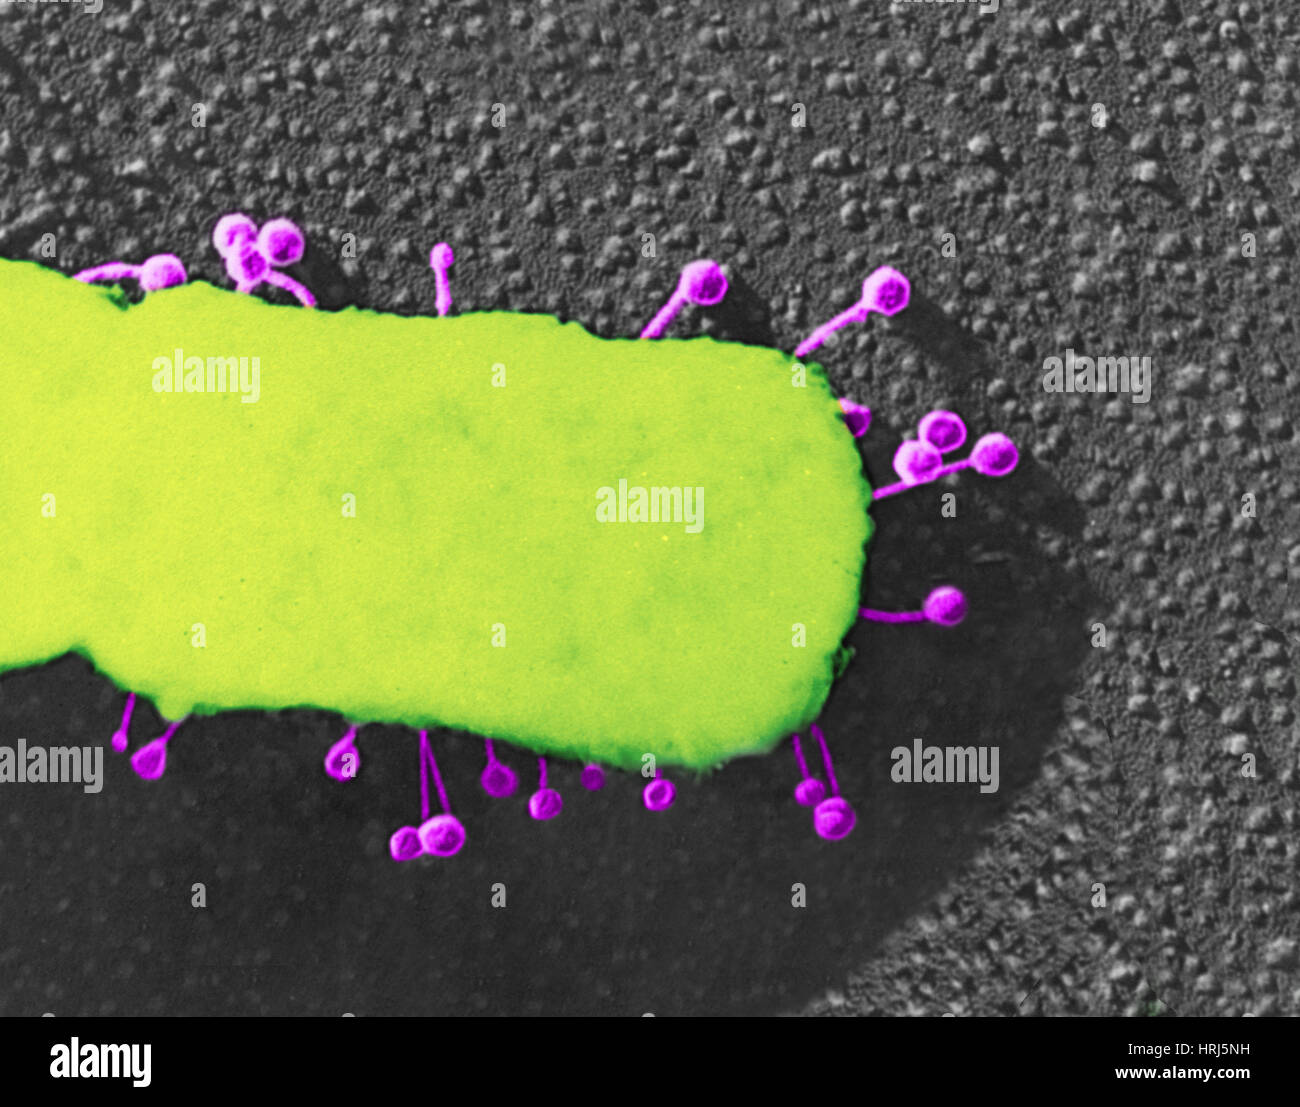 Lambda Phage on E. coli Stock Photo